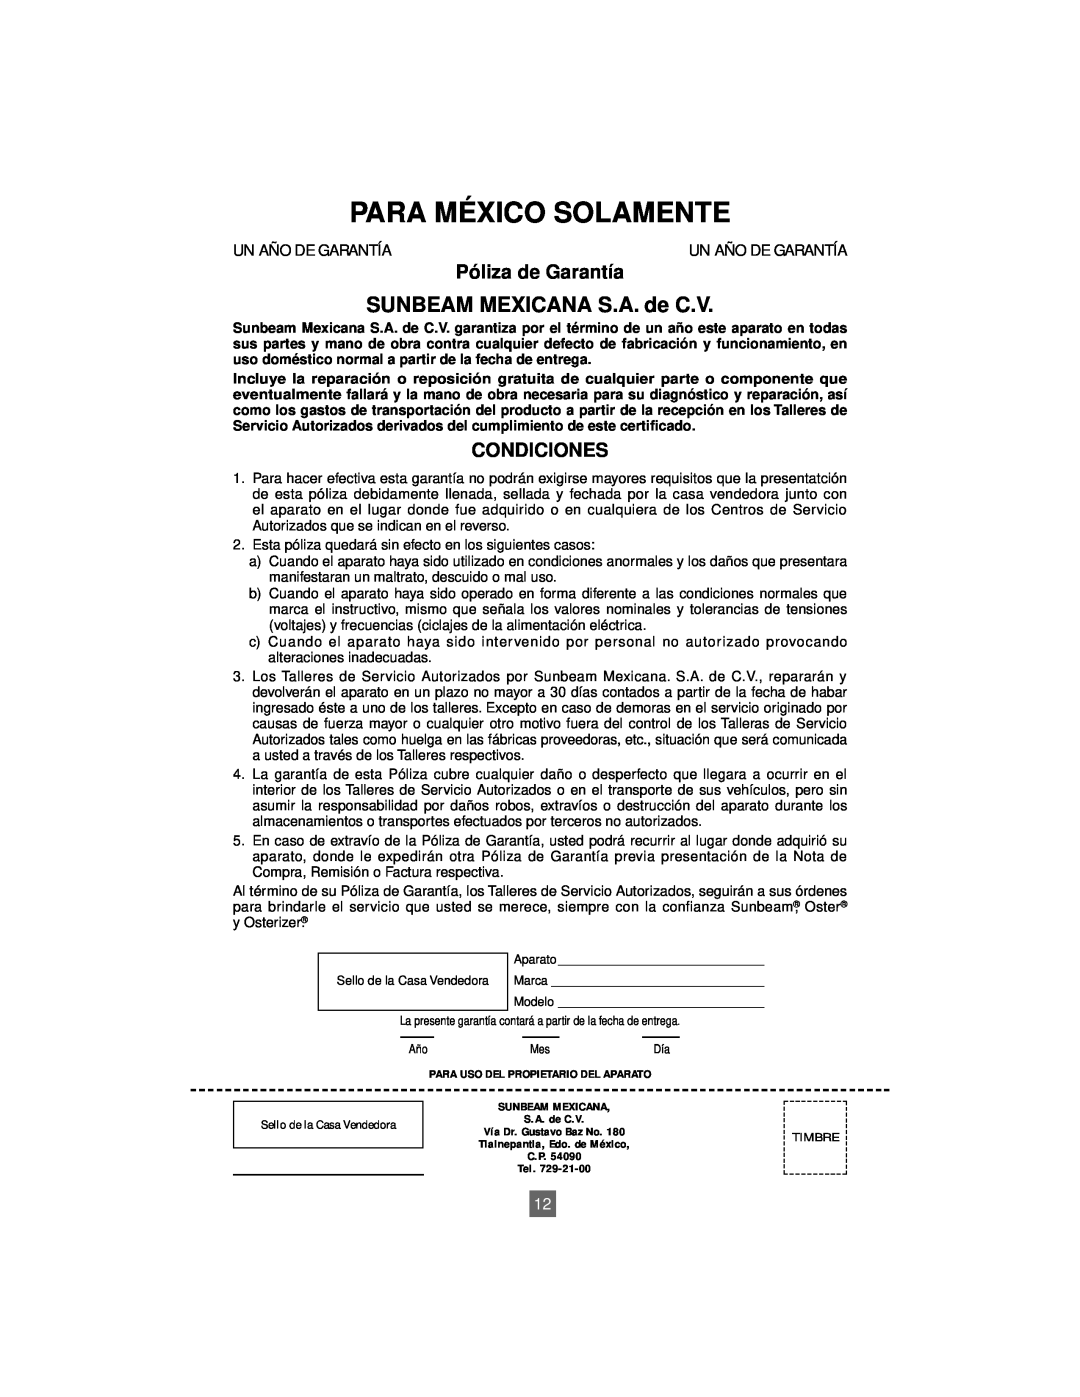 Oster 3876, 3877 instruction manual SUNBEAM MEXICANA S.A. de C.V, Para México Solamente, Póliza de Garantía, Condiciones 